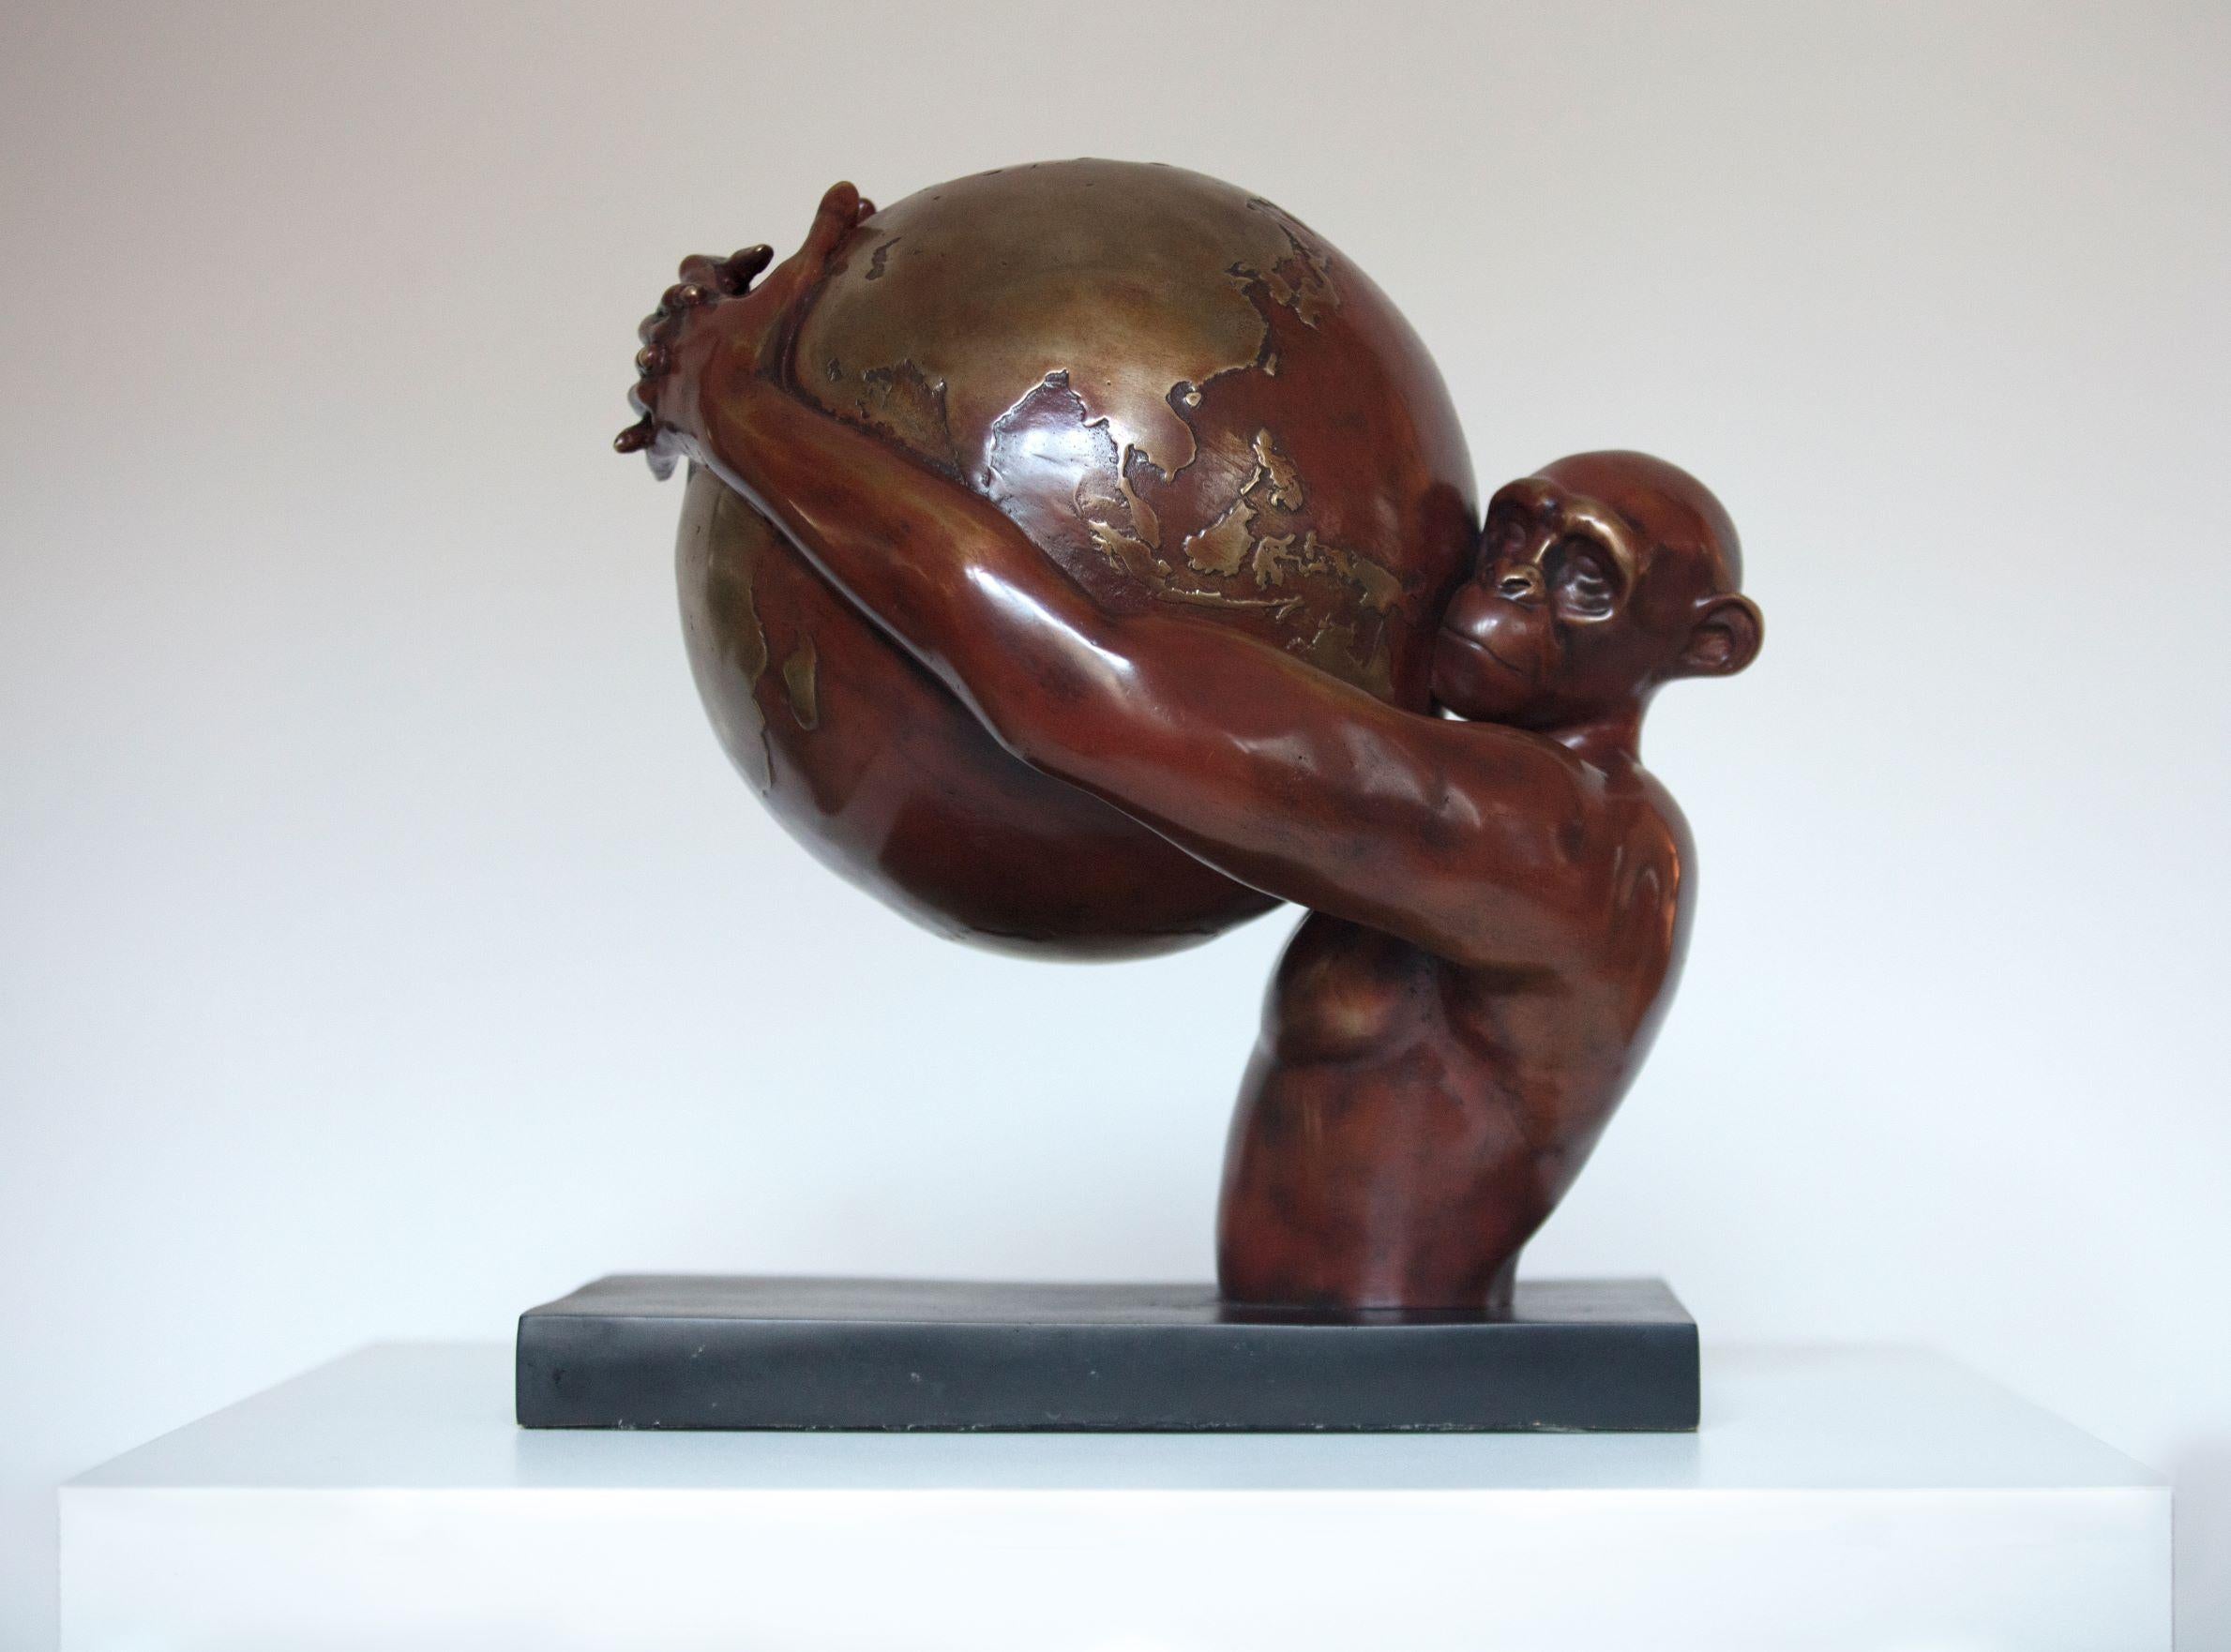 Beto Gatti Figurative Sculpture - Human Rights - bronze sculpture, 2022